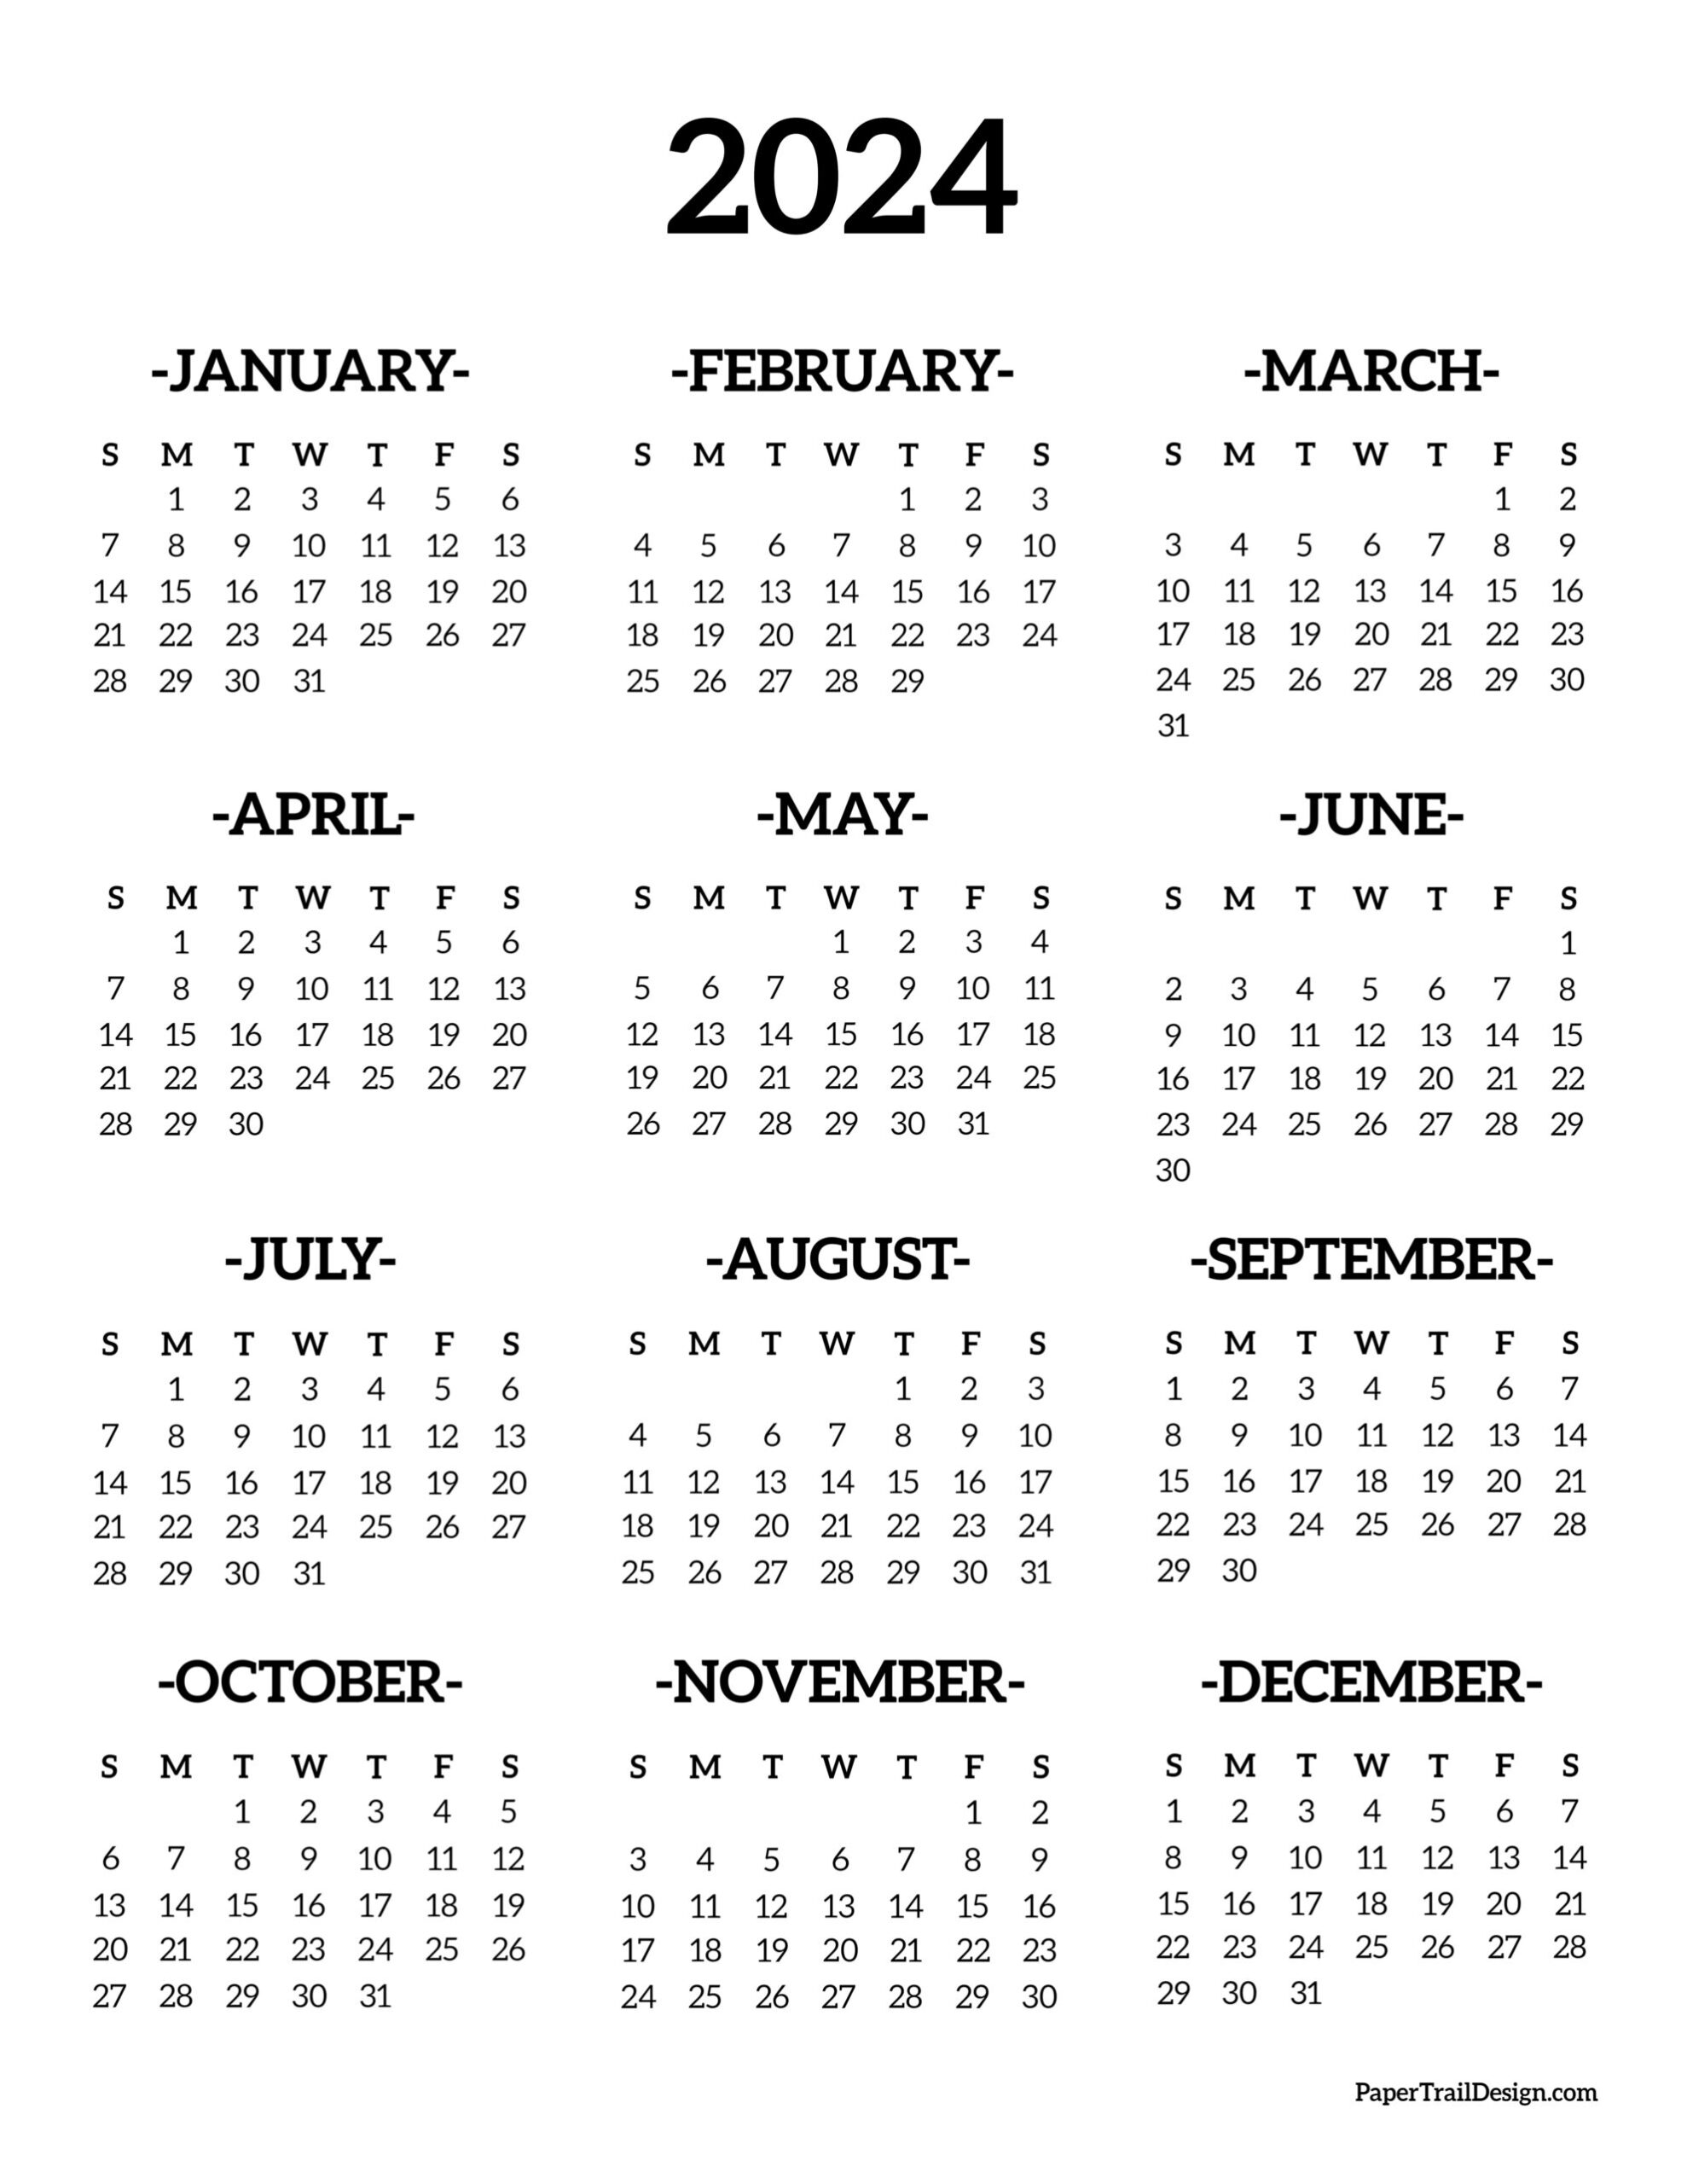 Calendar 2024 Printable One Page - Paper Trail Design for Calendar 2024 Free Printable